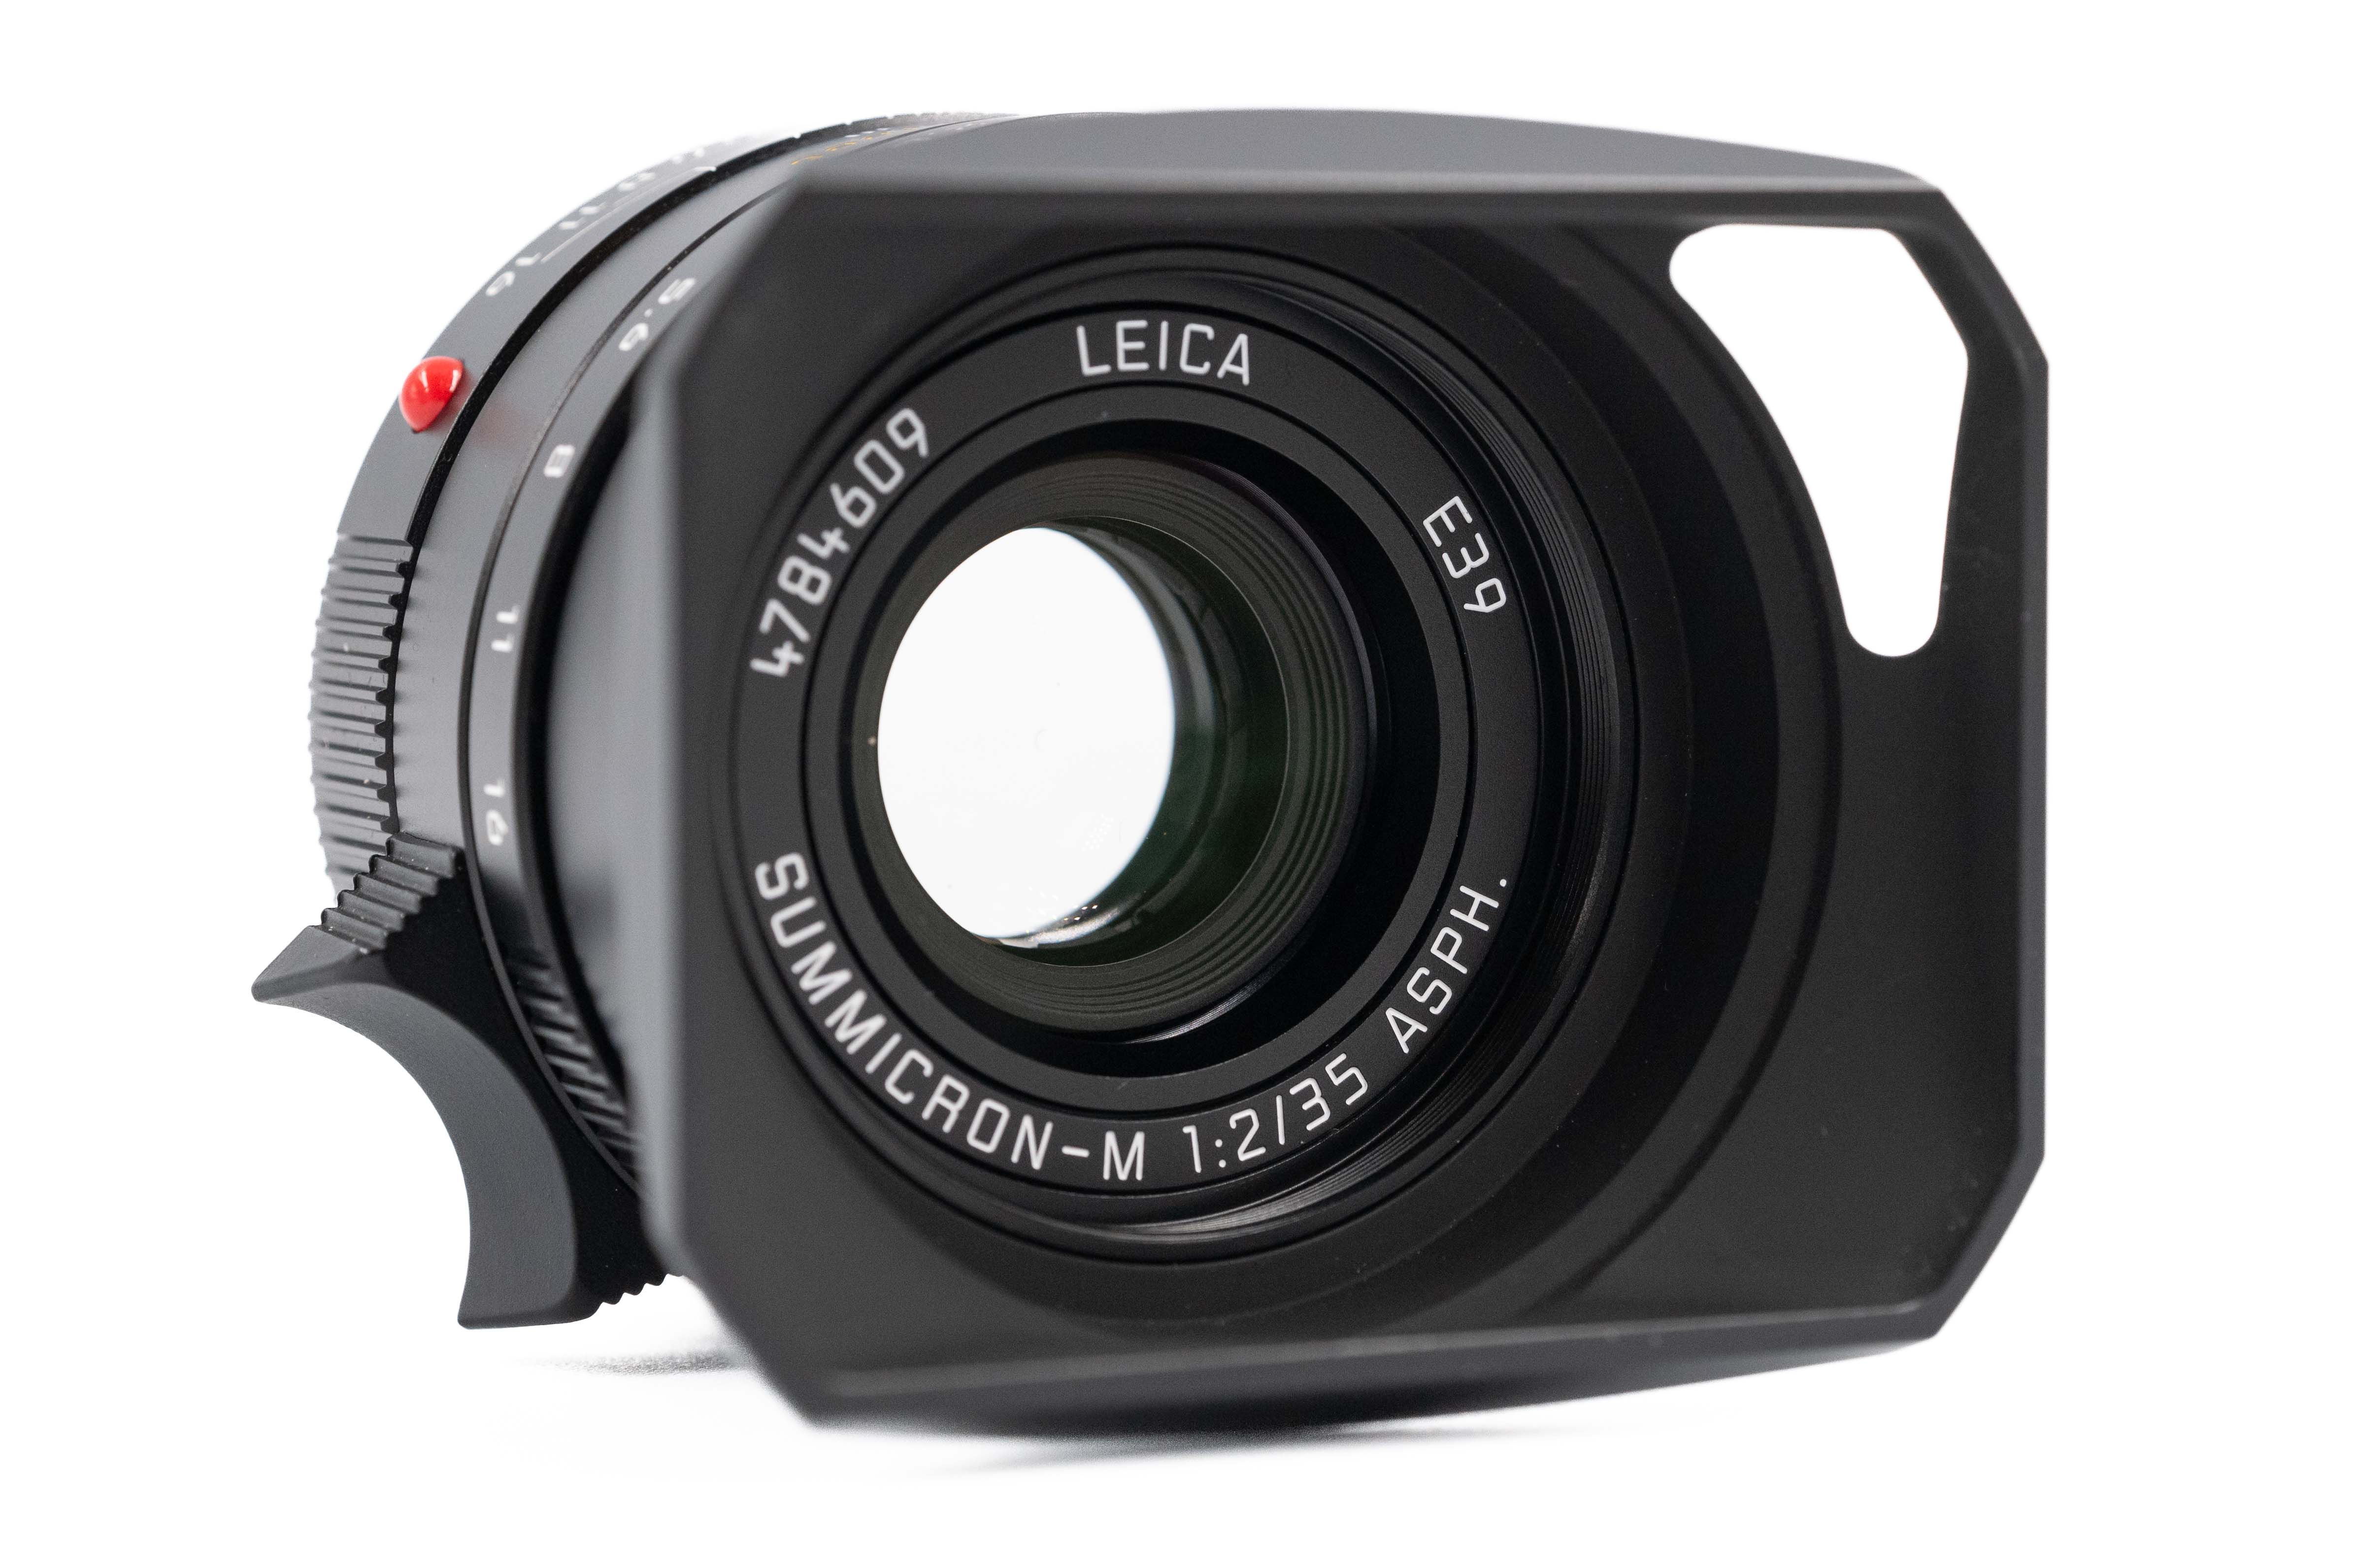 Leica Summicron-M 35mm f/2 ASPH V2 Made in Portugal 11708